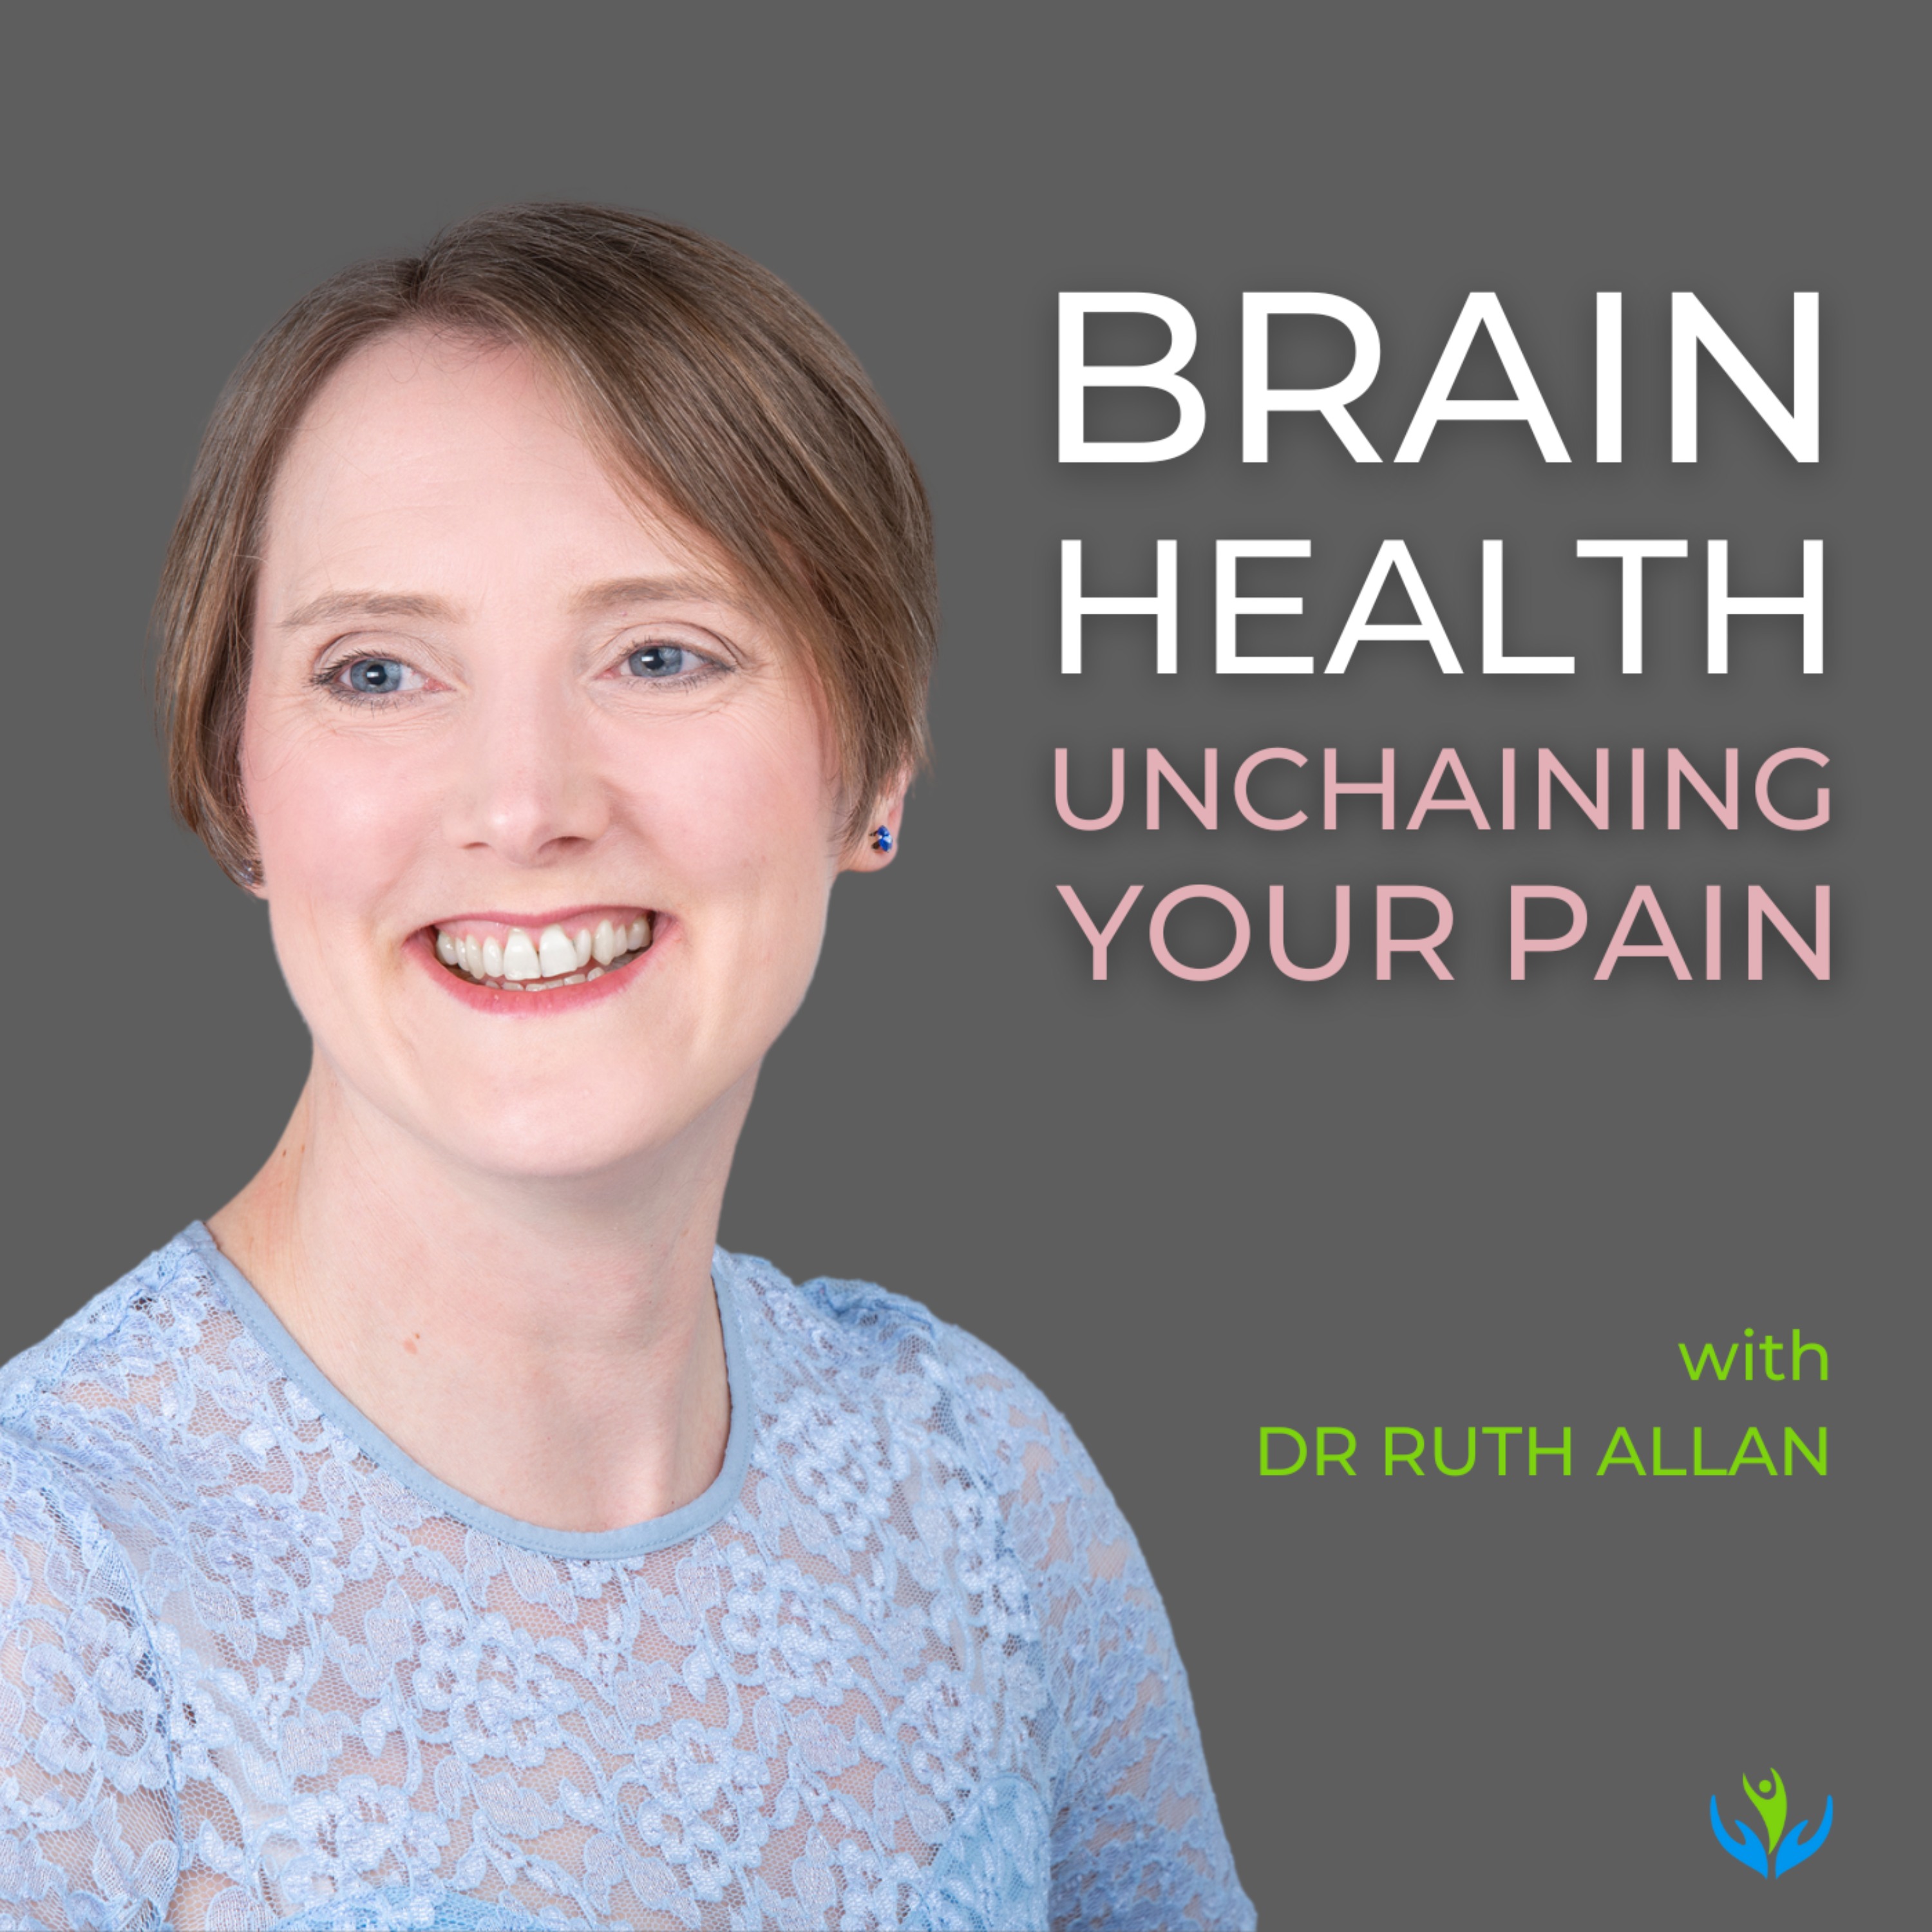 Brain Health: Unchaining Your Pain